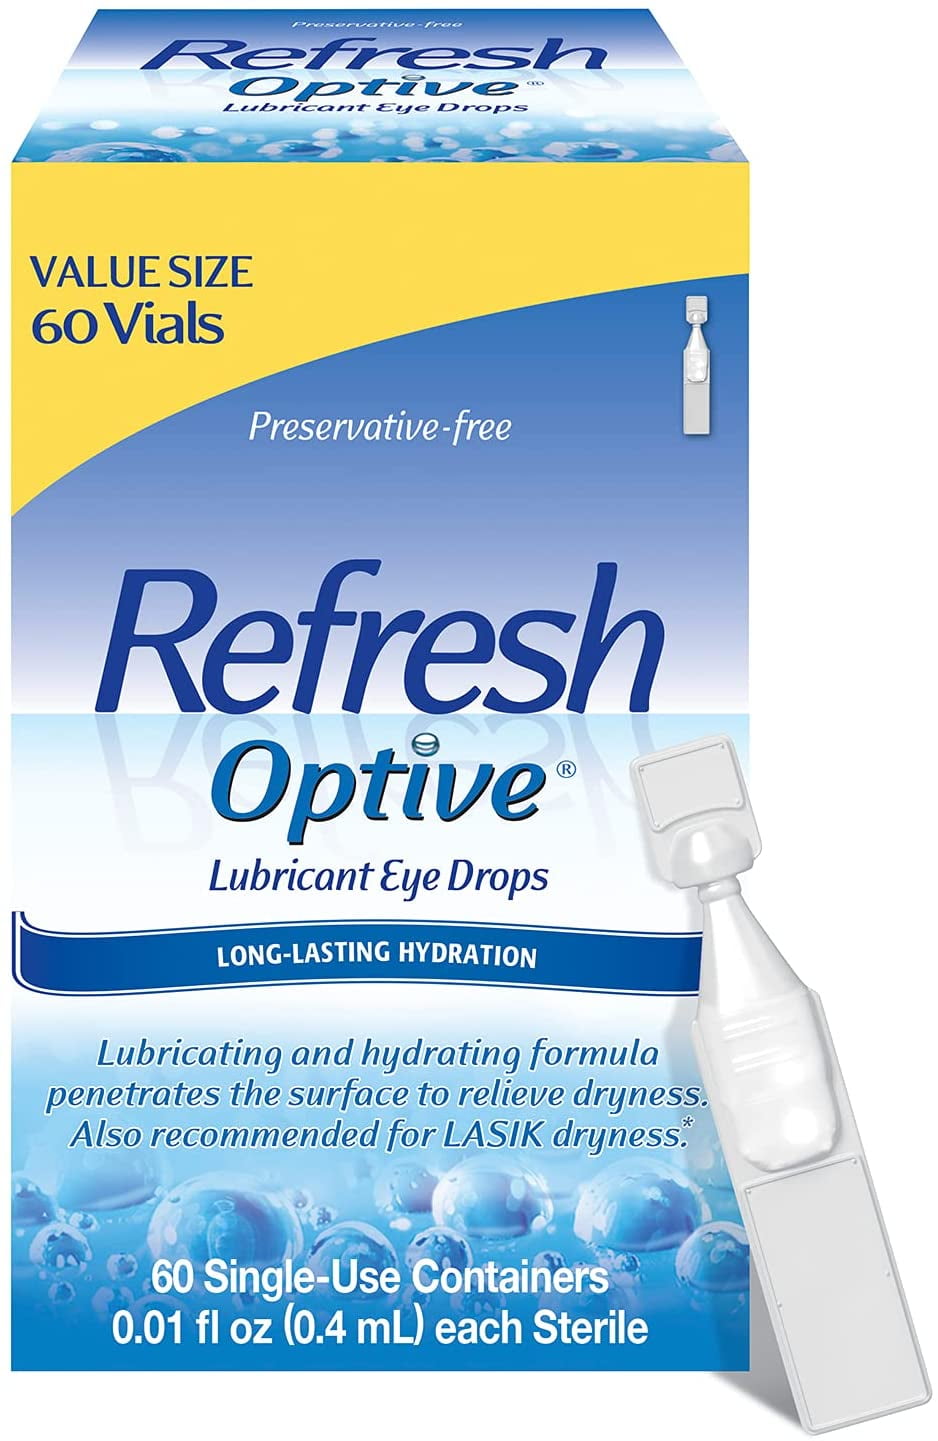 Refresh Optive Lubricant Eye Drops - 30 pack, 0.01 fl oz vials